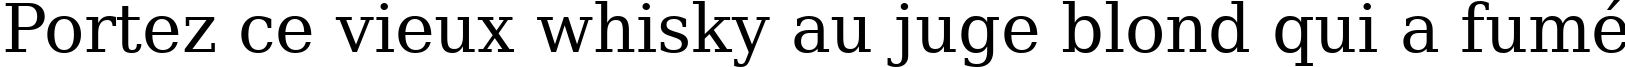 Пример написания шрифтом ae_Granada текста на французском